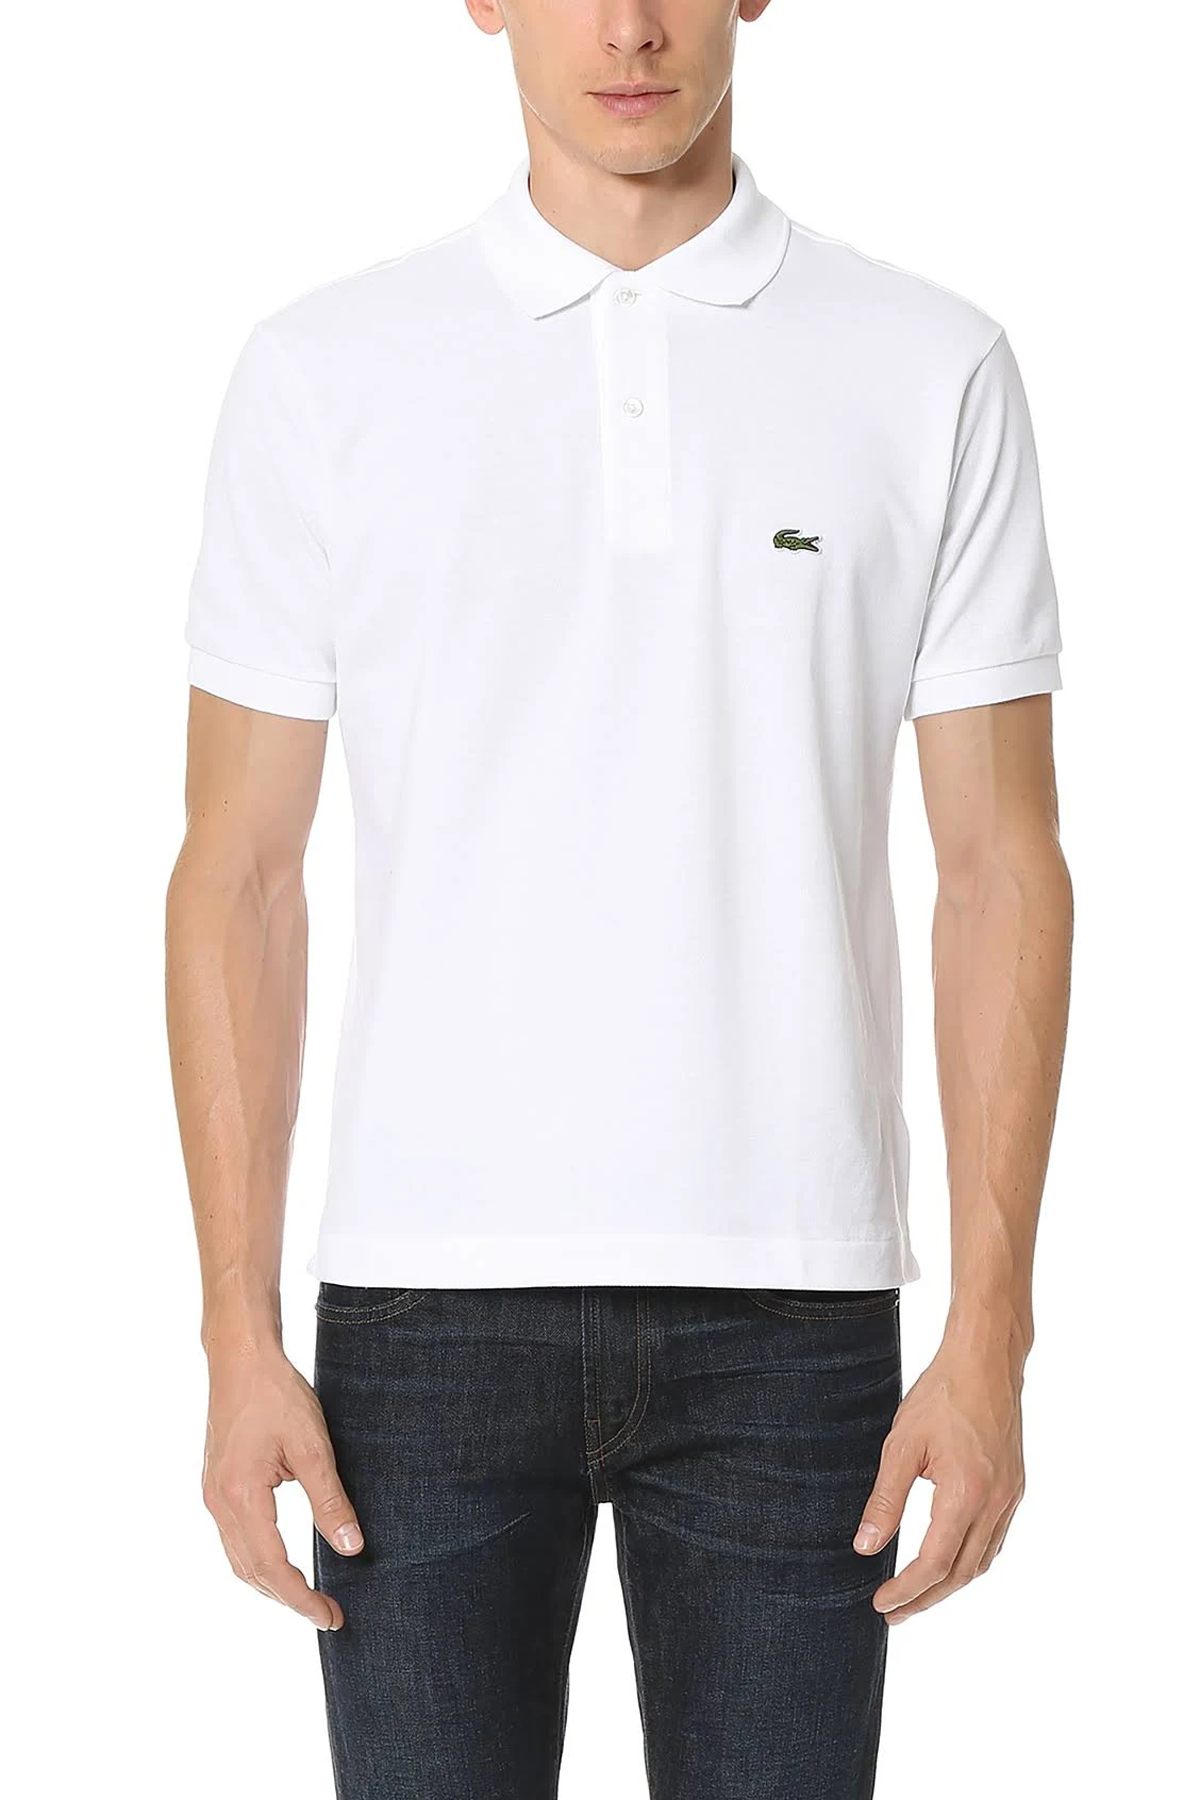 Lacoste White L1212 custom logo polo shirts